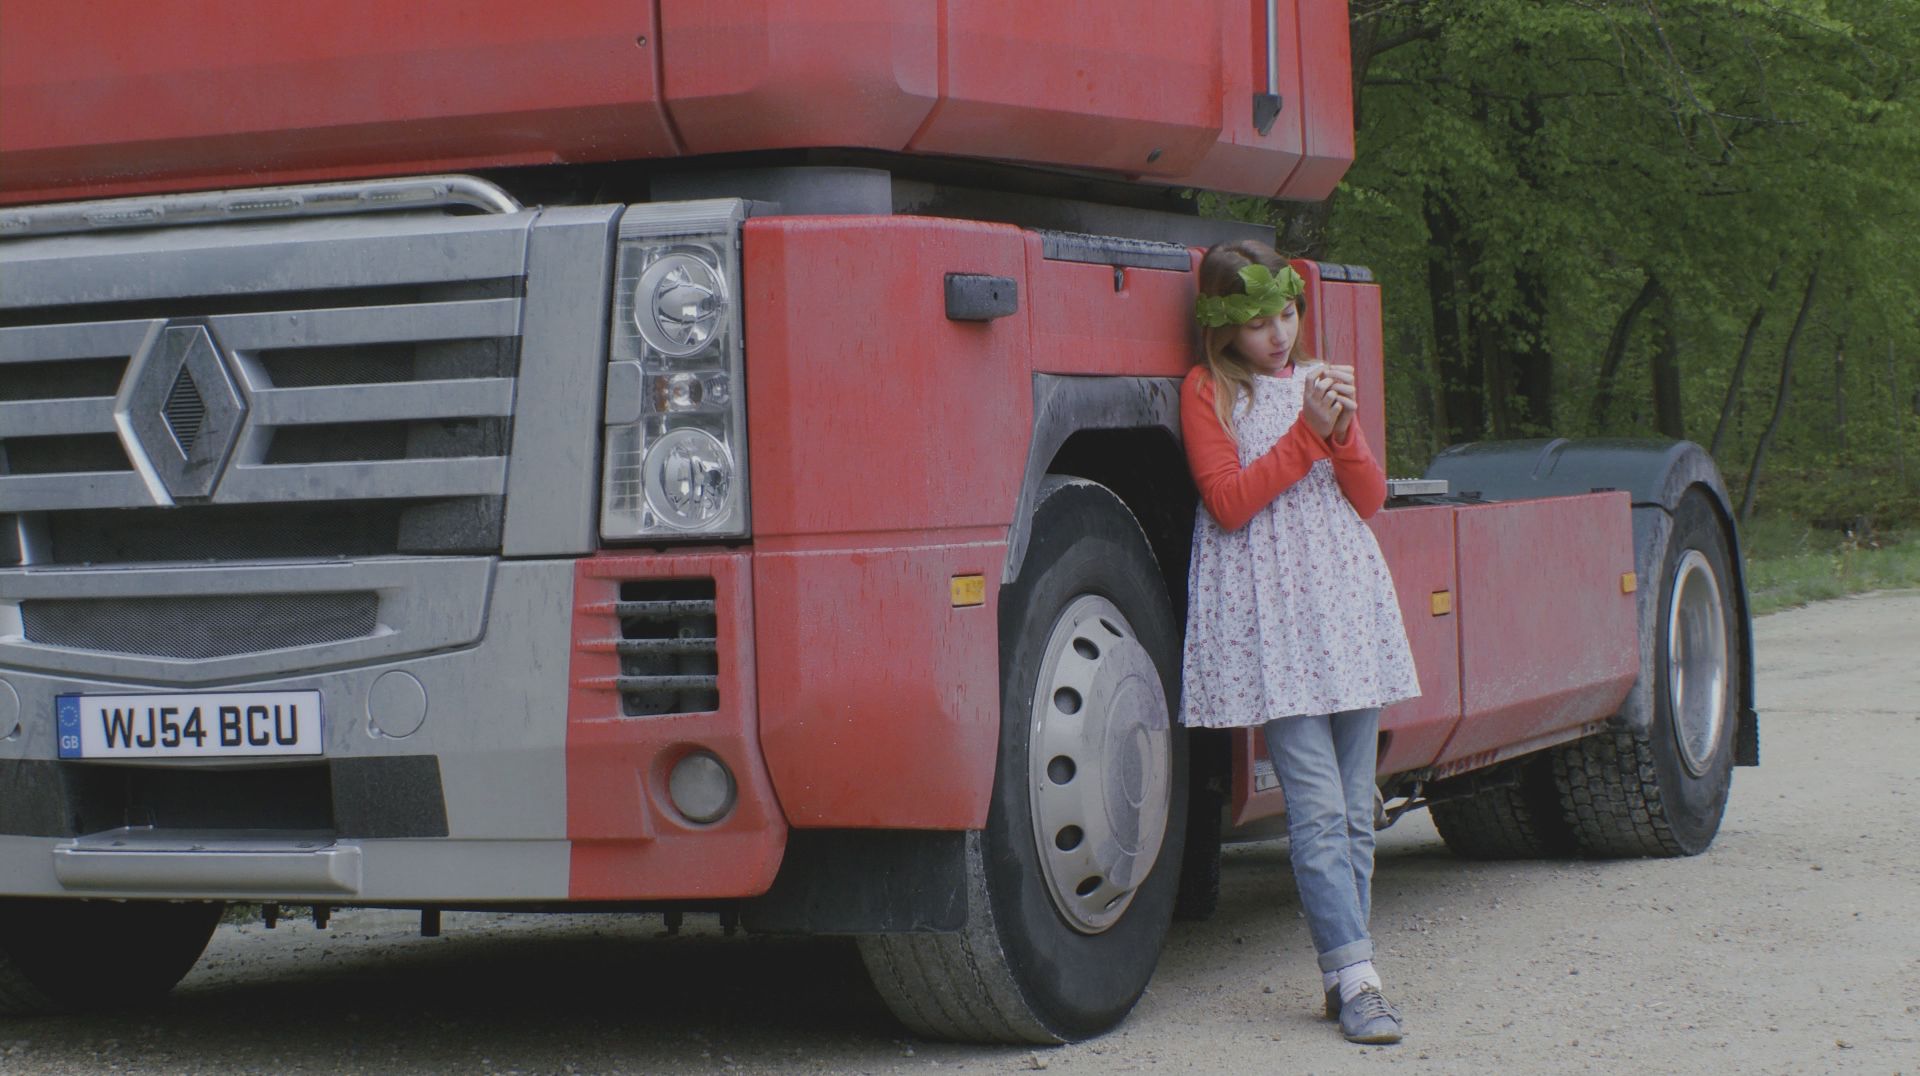 Celine ponders by a truck